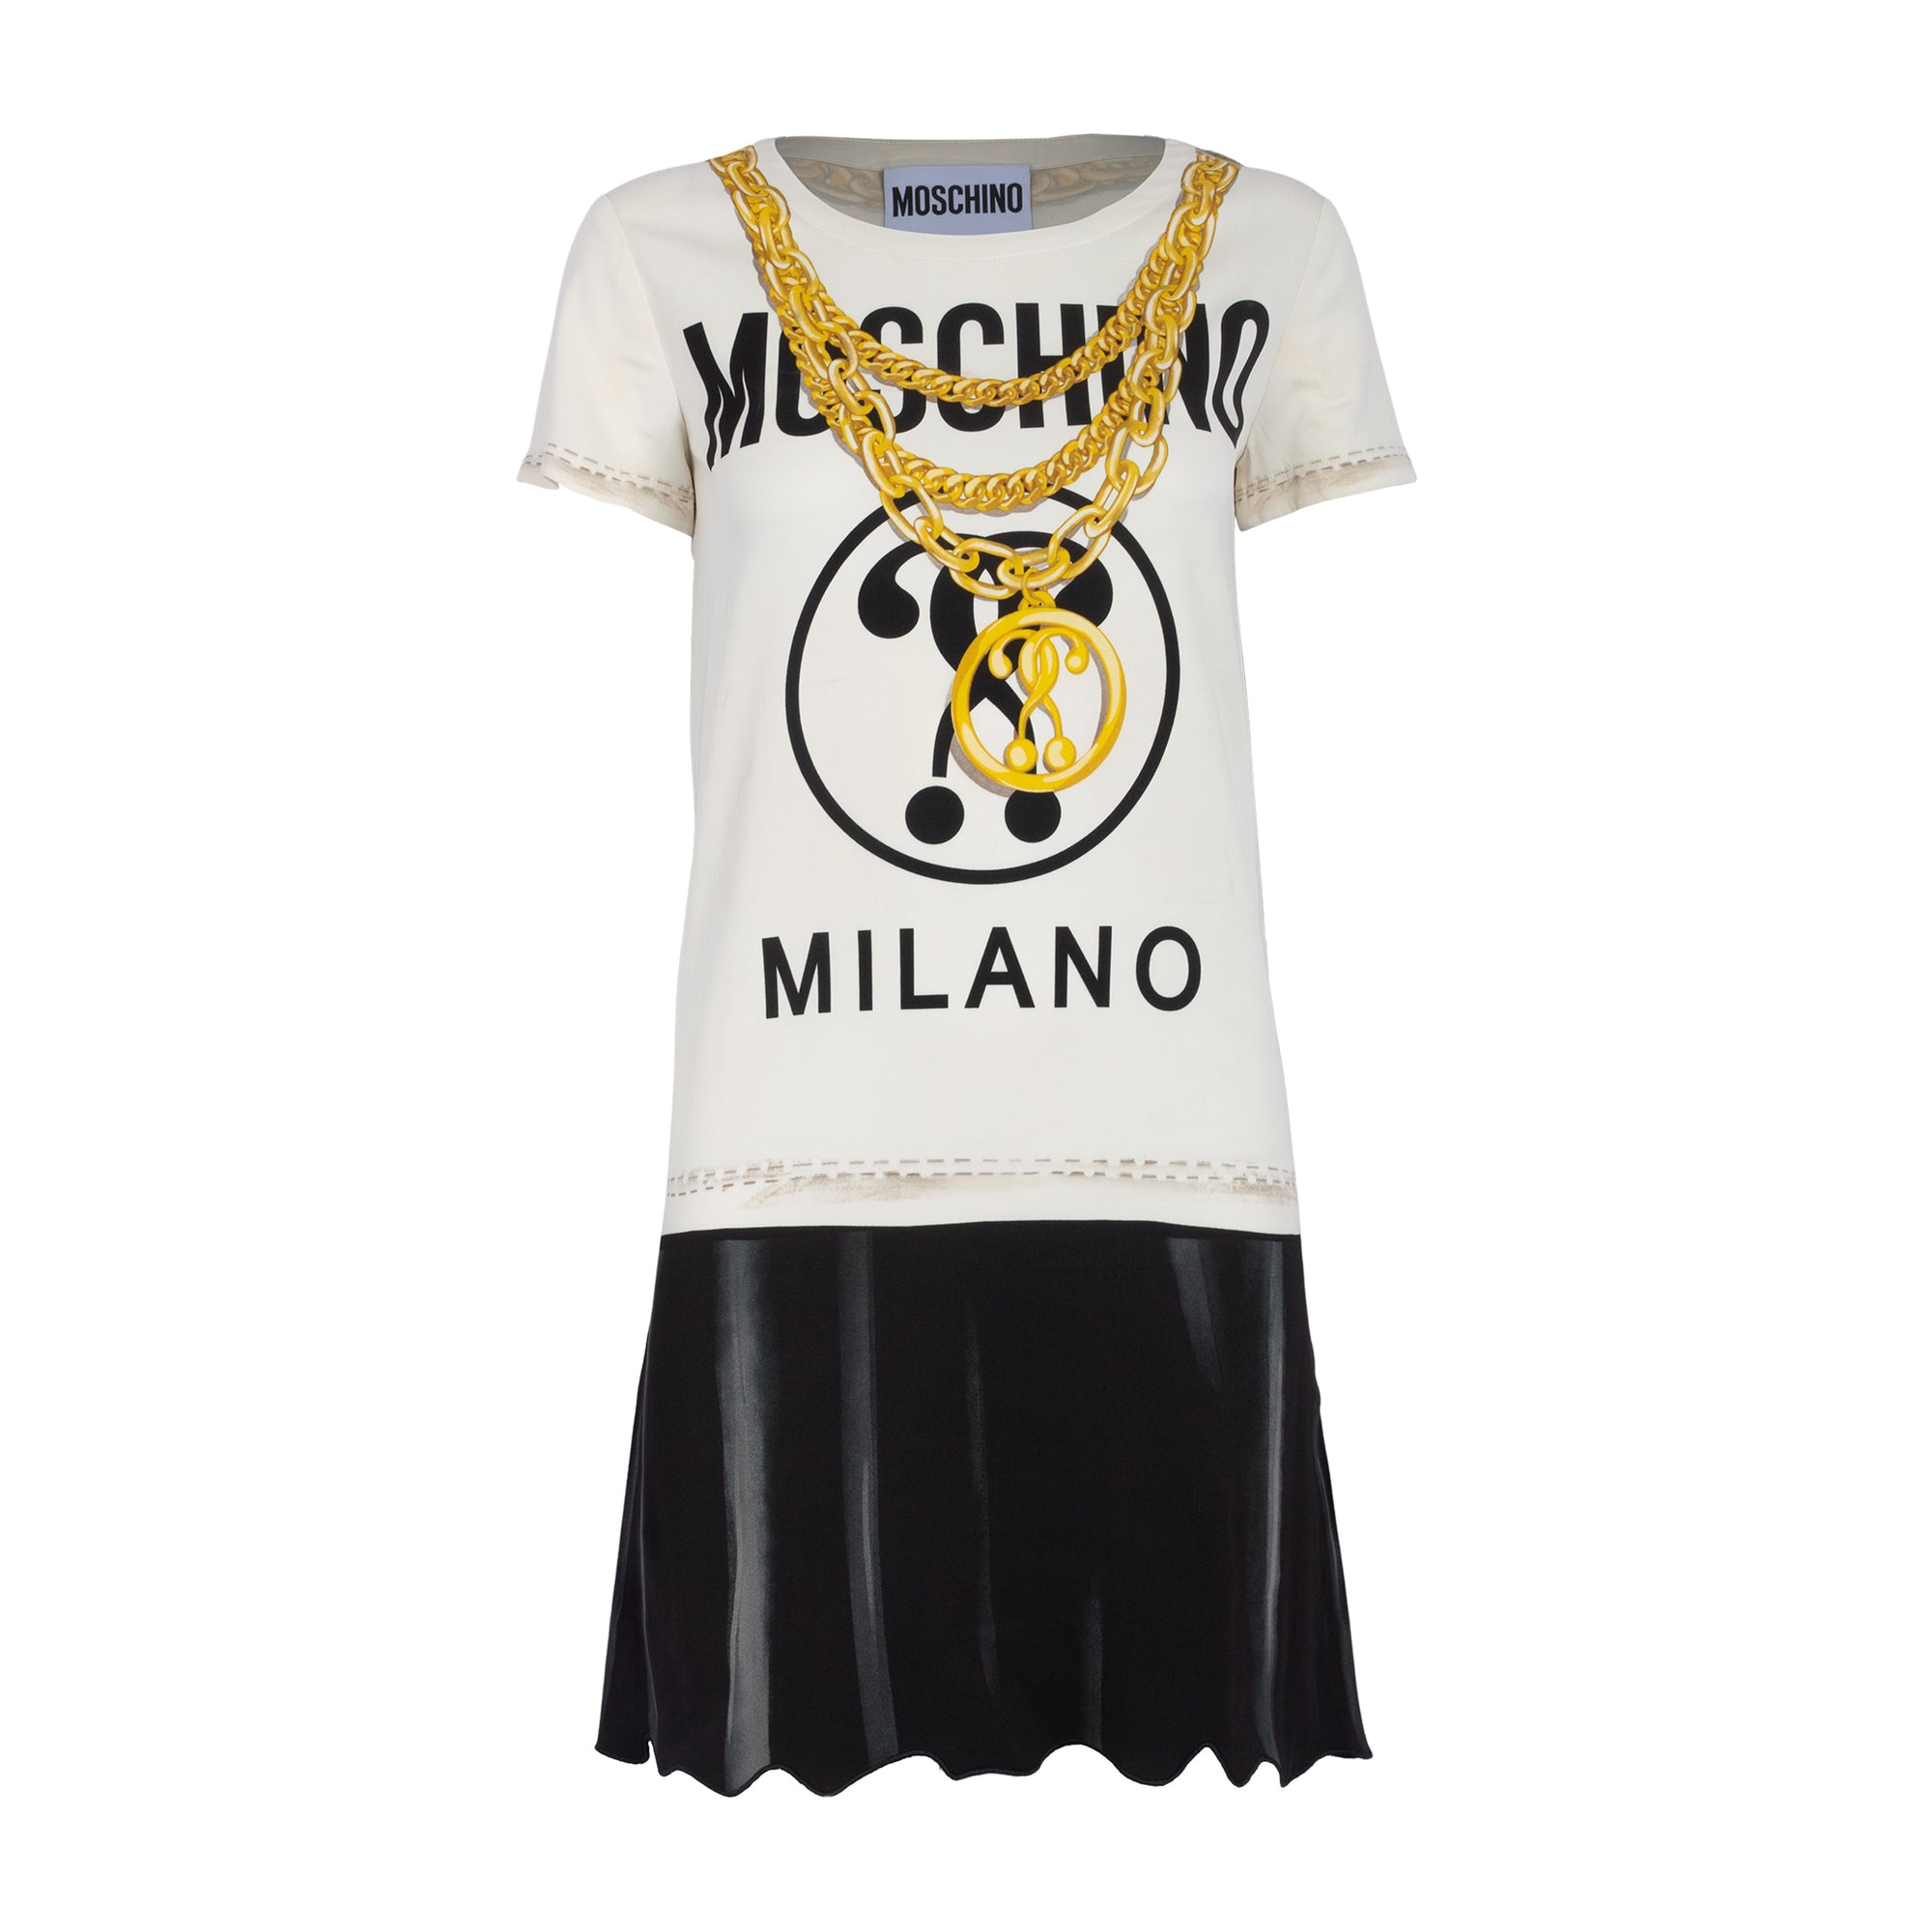 Moschino T-Shirt Dress